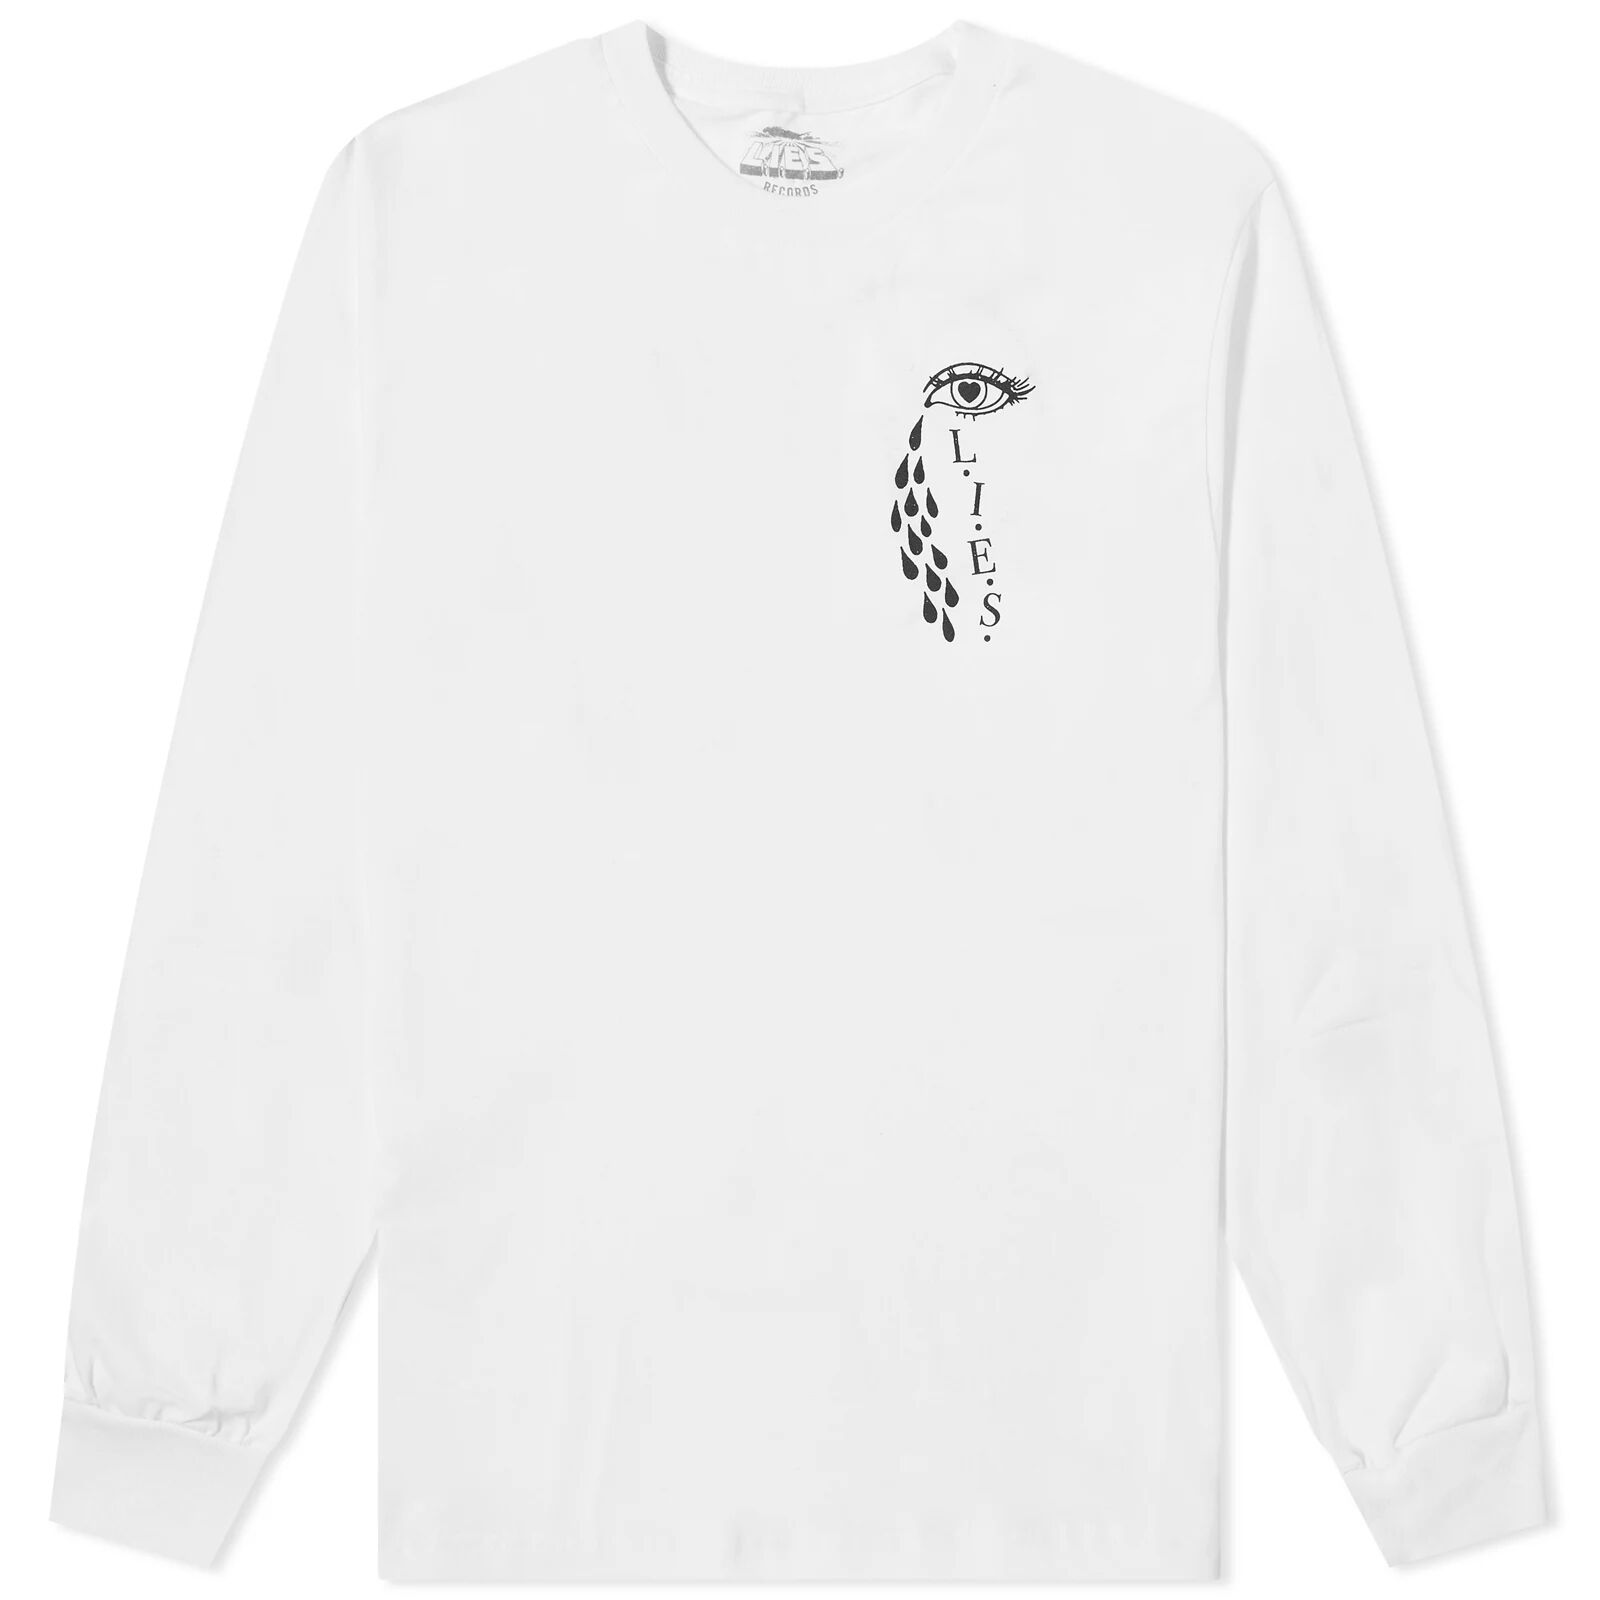 L.I.E.S. Records Men's Broken Heart Long Sleeve T-Shirt in White, Size X-Large